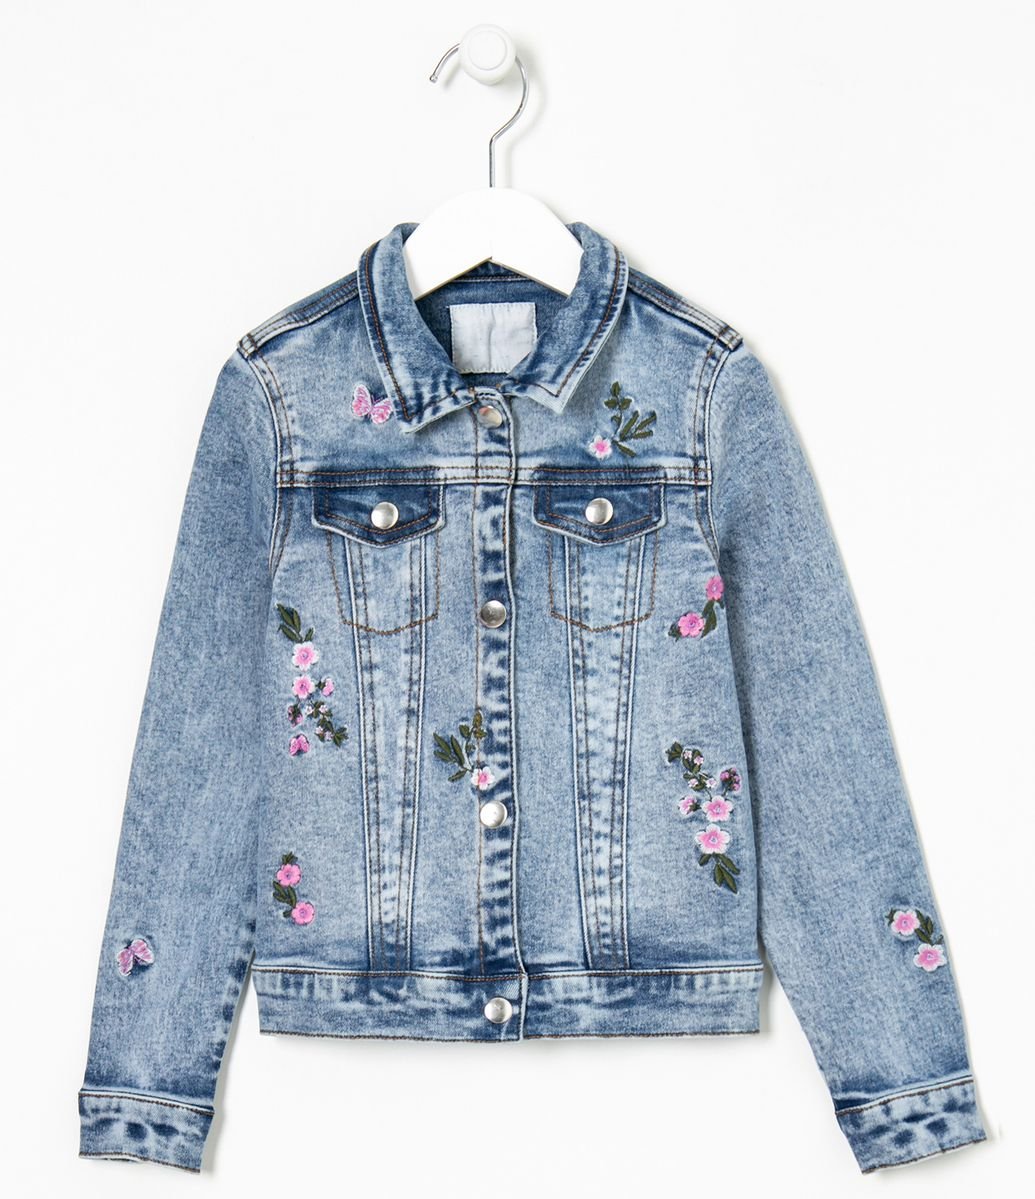 jaqueta jeans bordada com flores